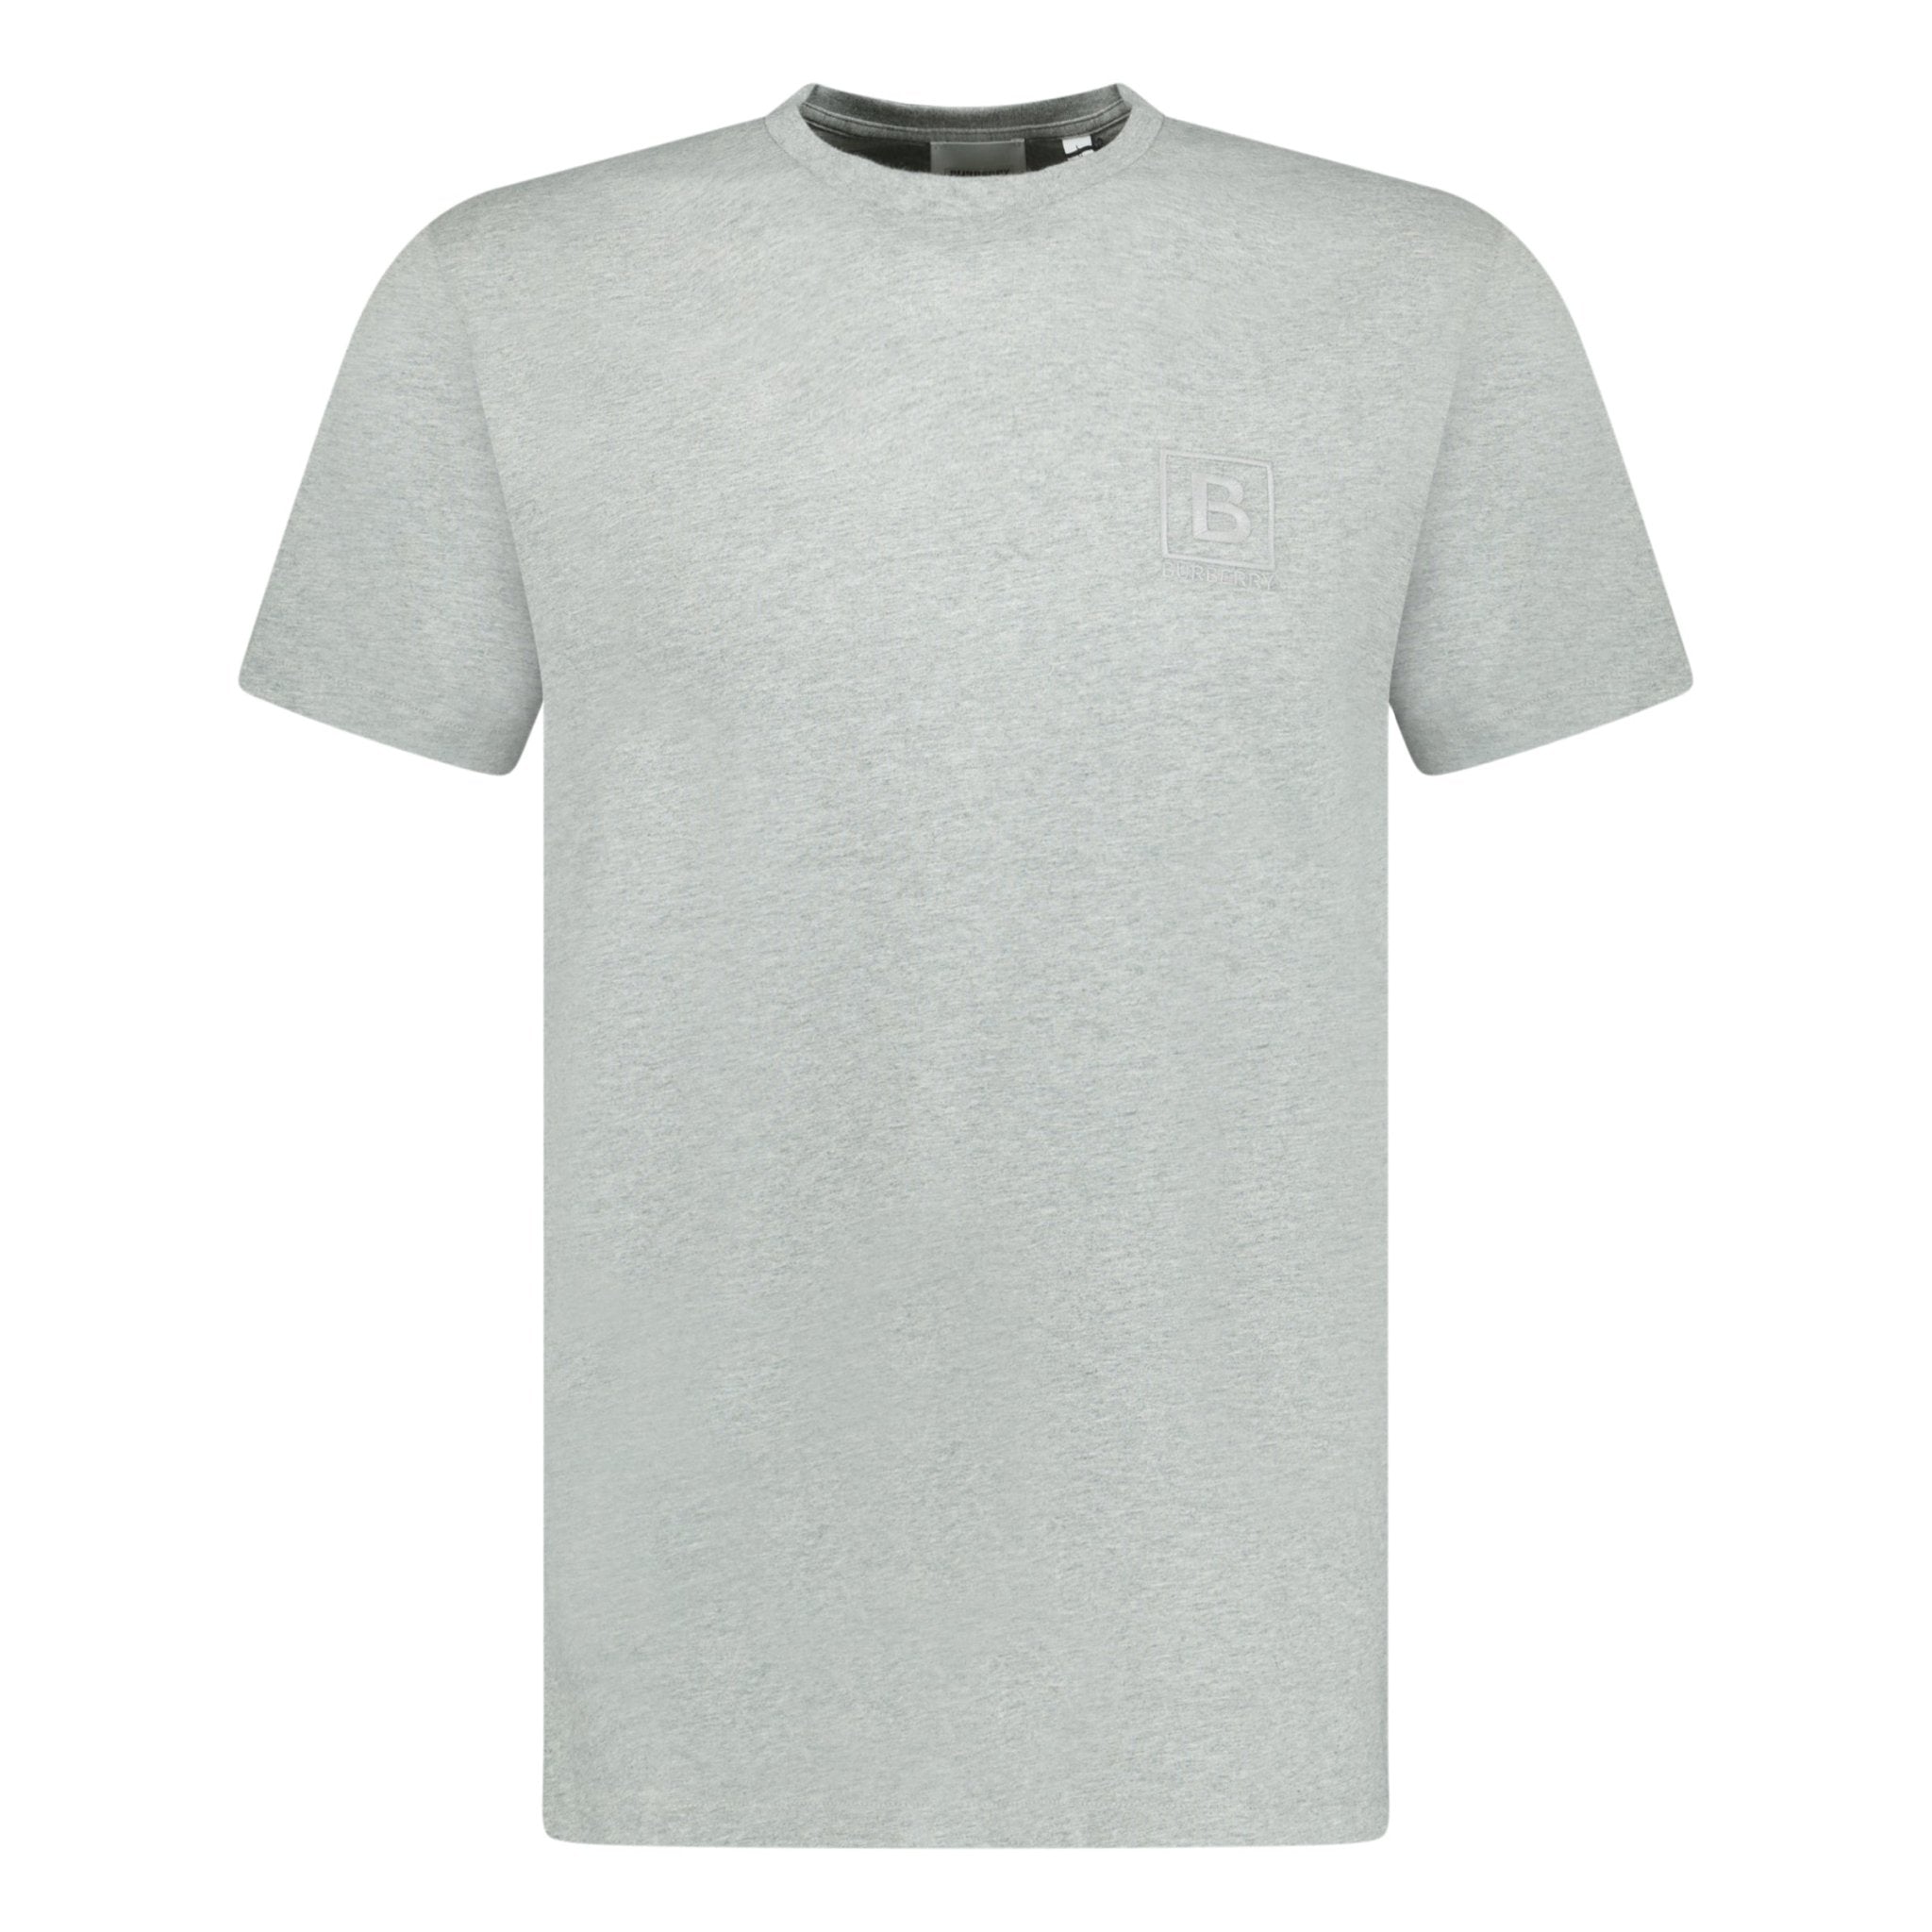 Burberry 'Jenson' T-Shirt Grey